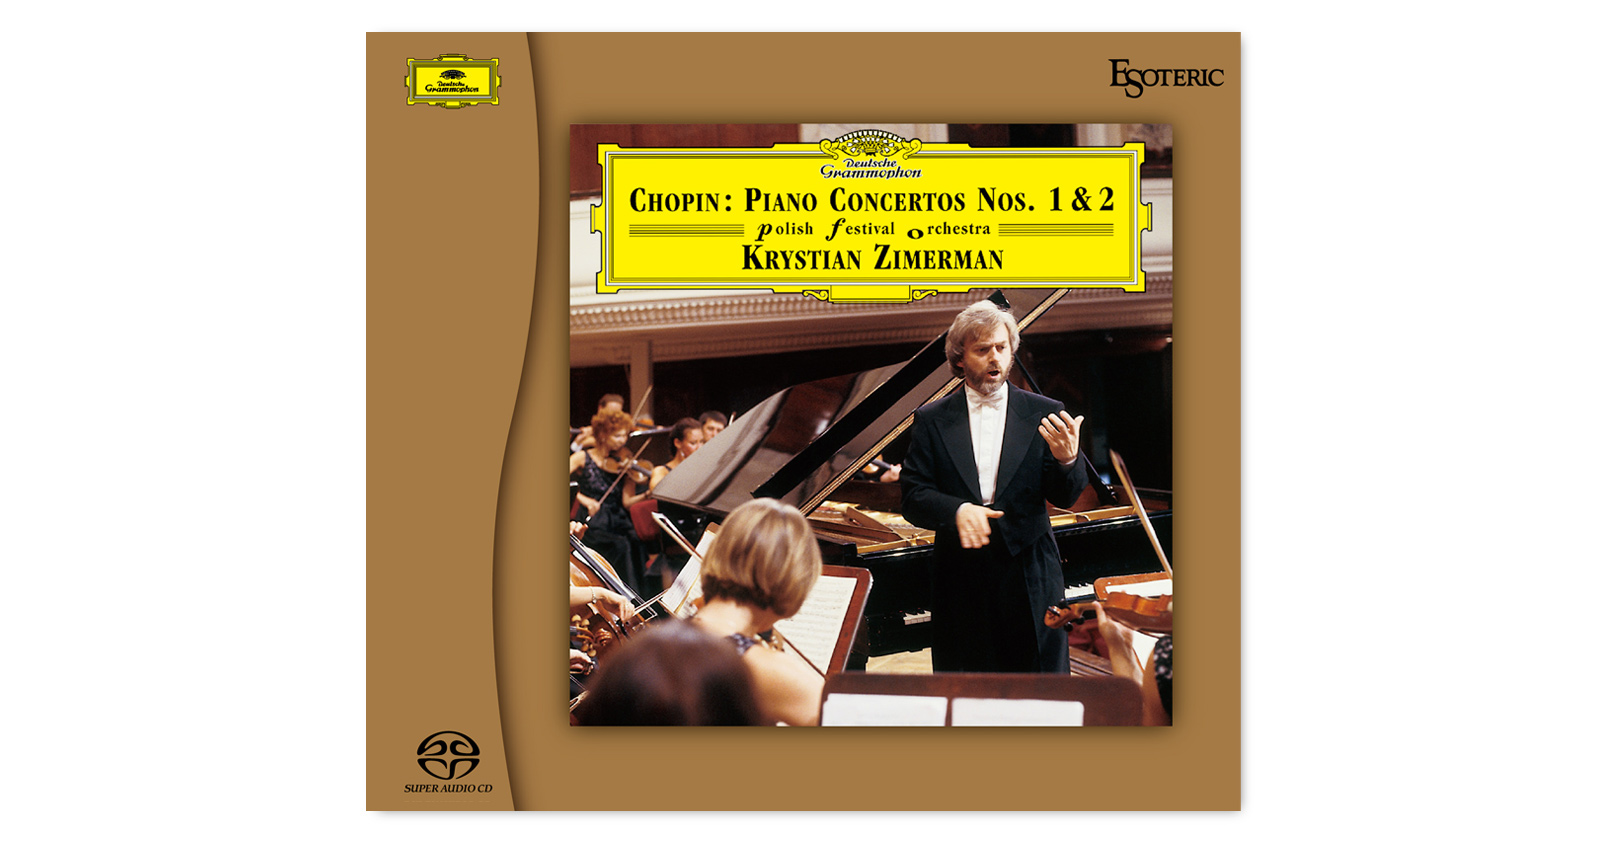 Frédéric Chopin: Piano Concertos Nos.1 & 2, Krystian Zimerman/conductor/Polish Festival Orchestra - 2x Hybrid SACD, Limited, Remastered